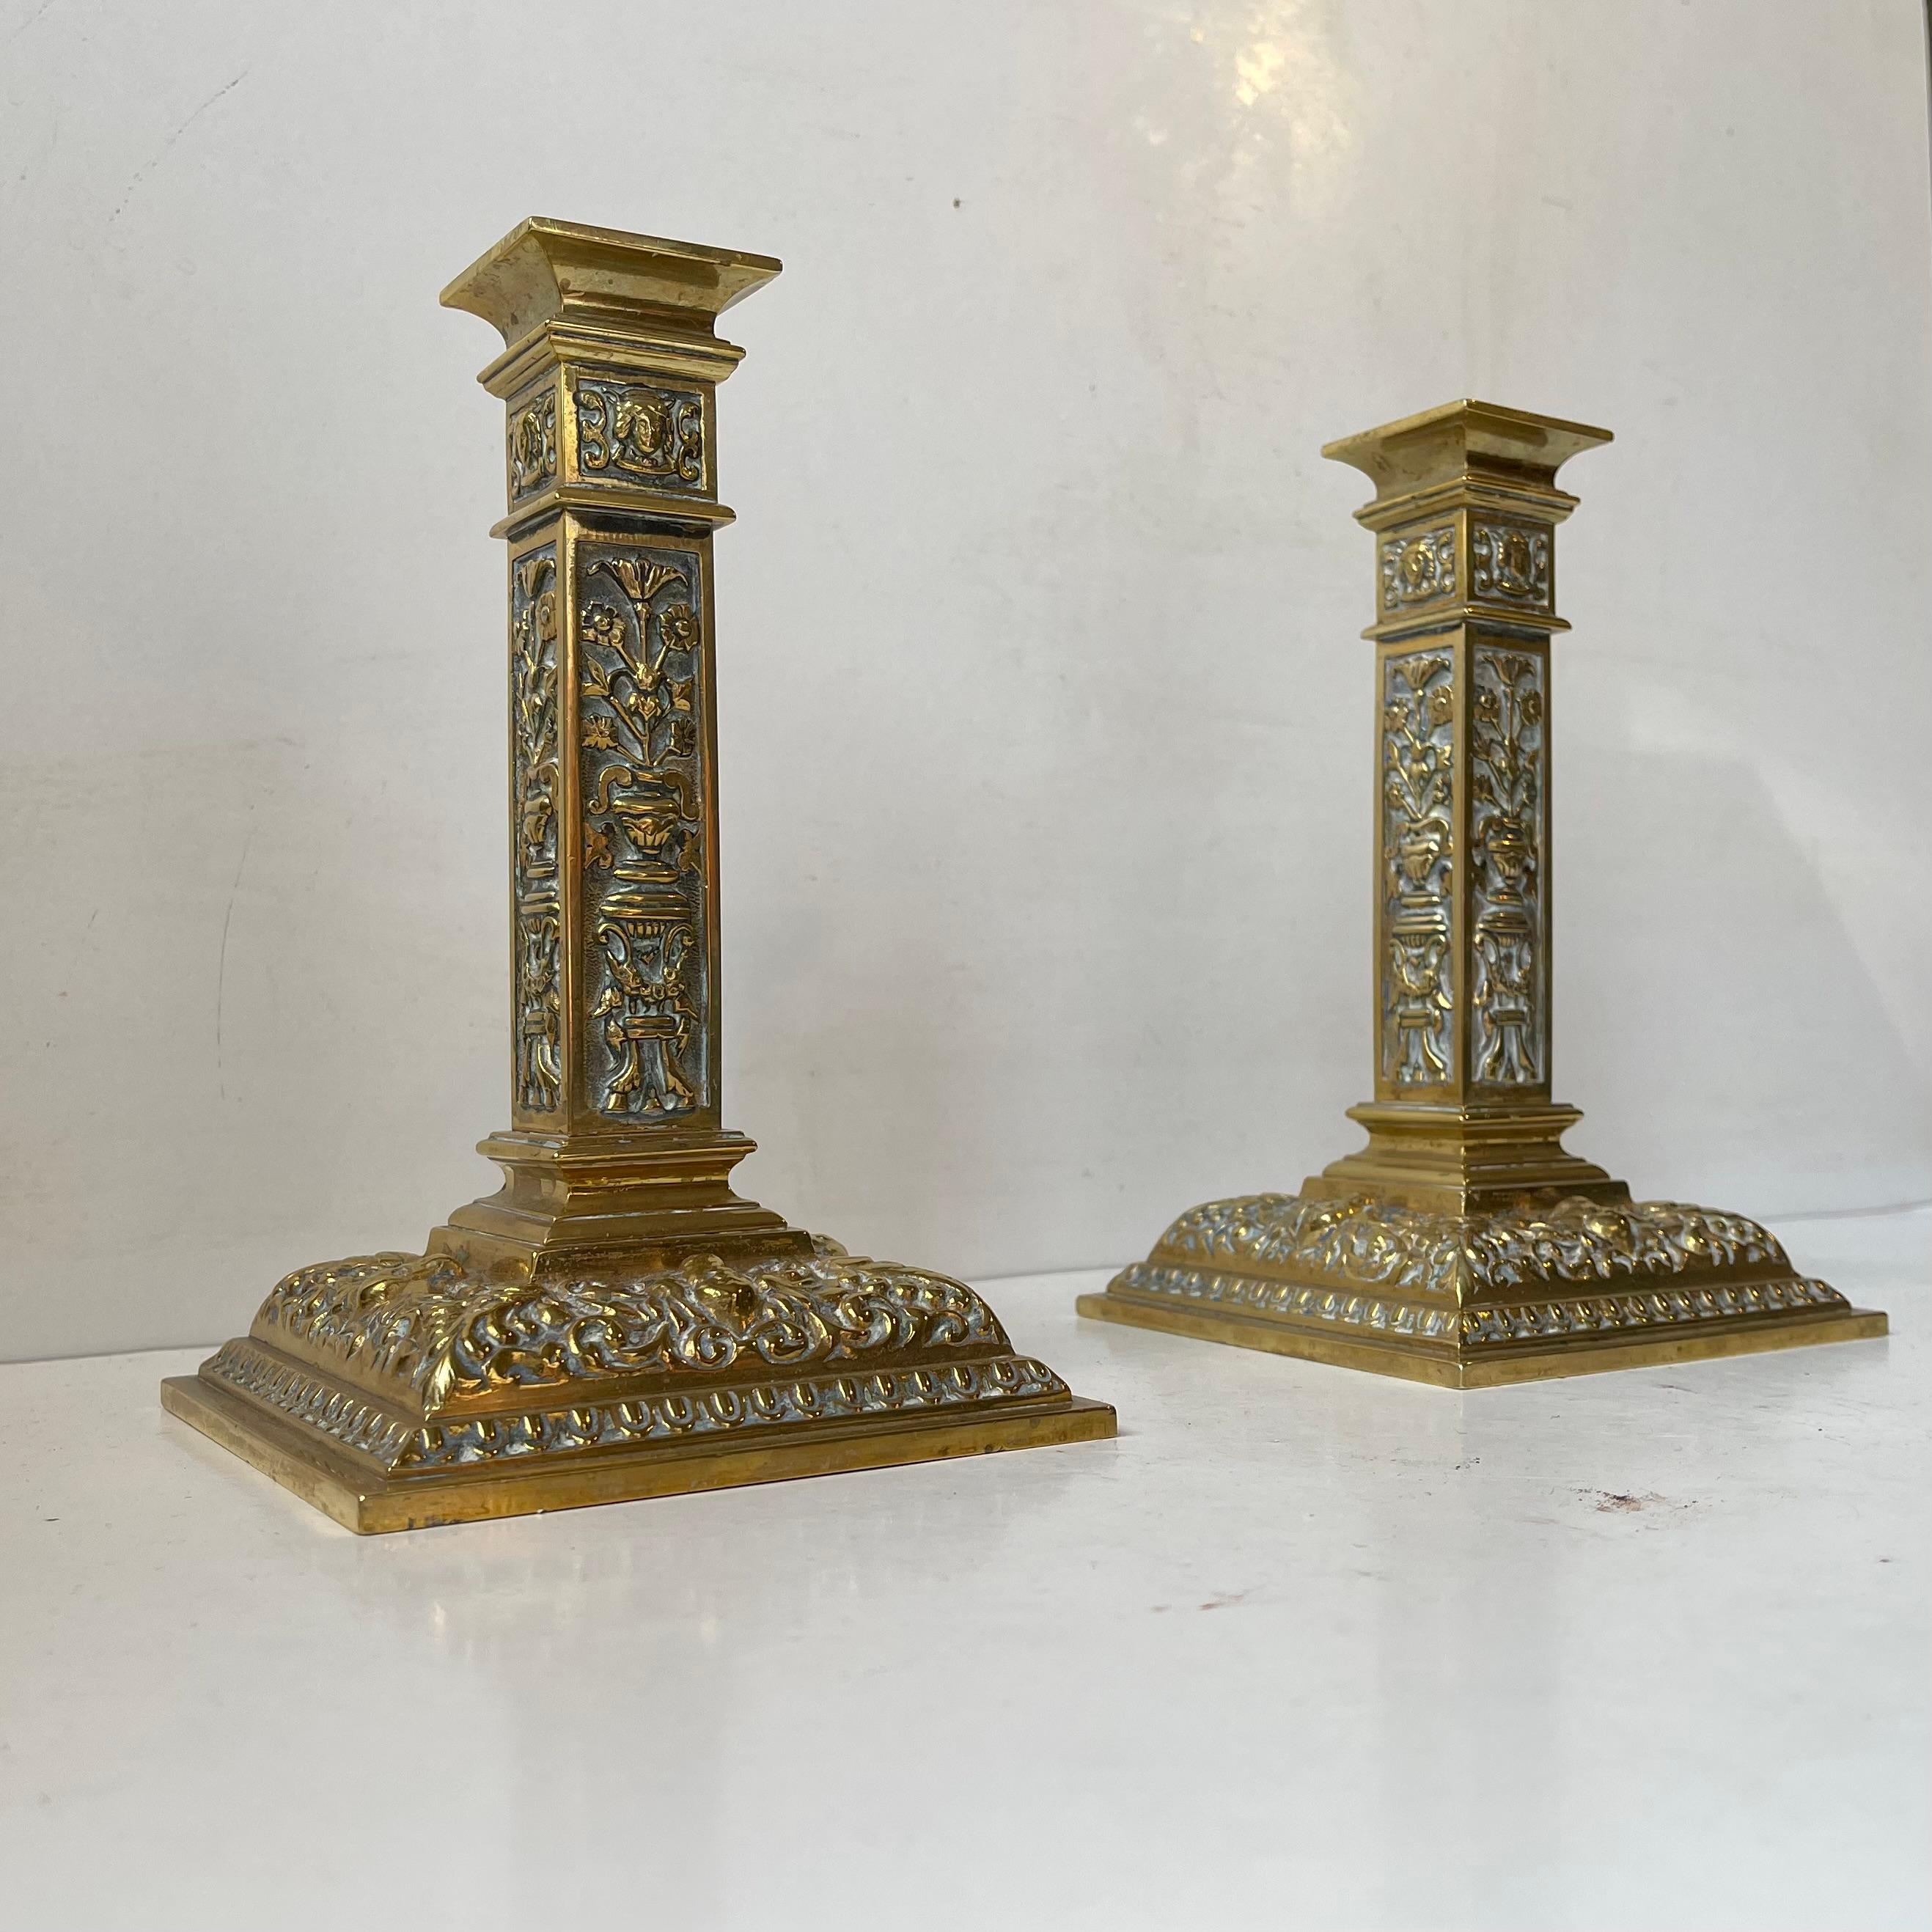 Neoclassical Revival Antique English Gilt Ormulo Bronze Candlesticks by Samuel Clark, 19th cen. For Sale